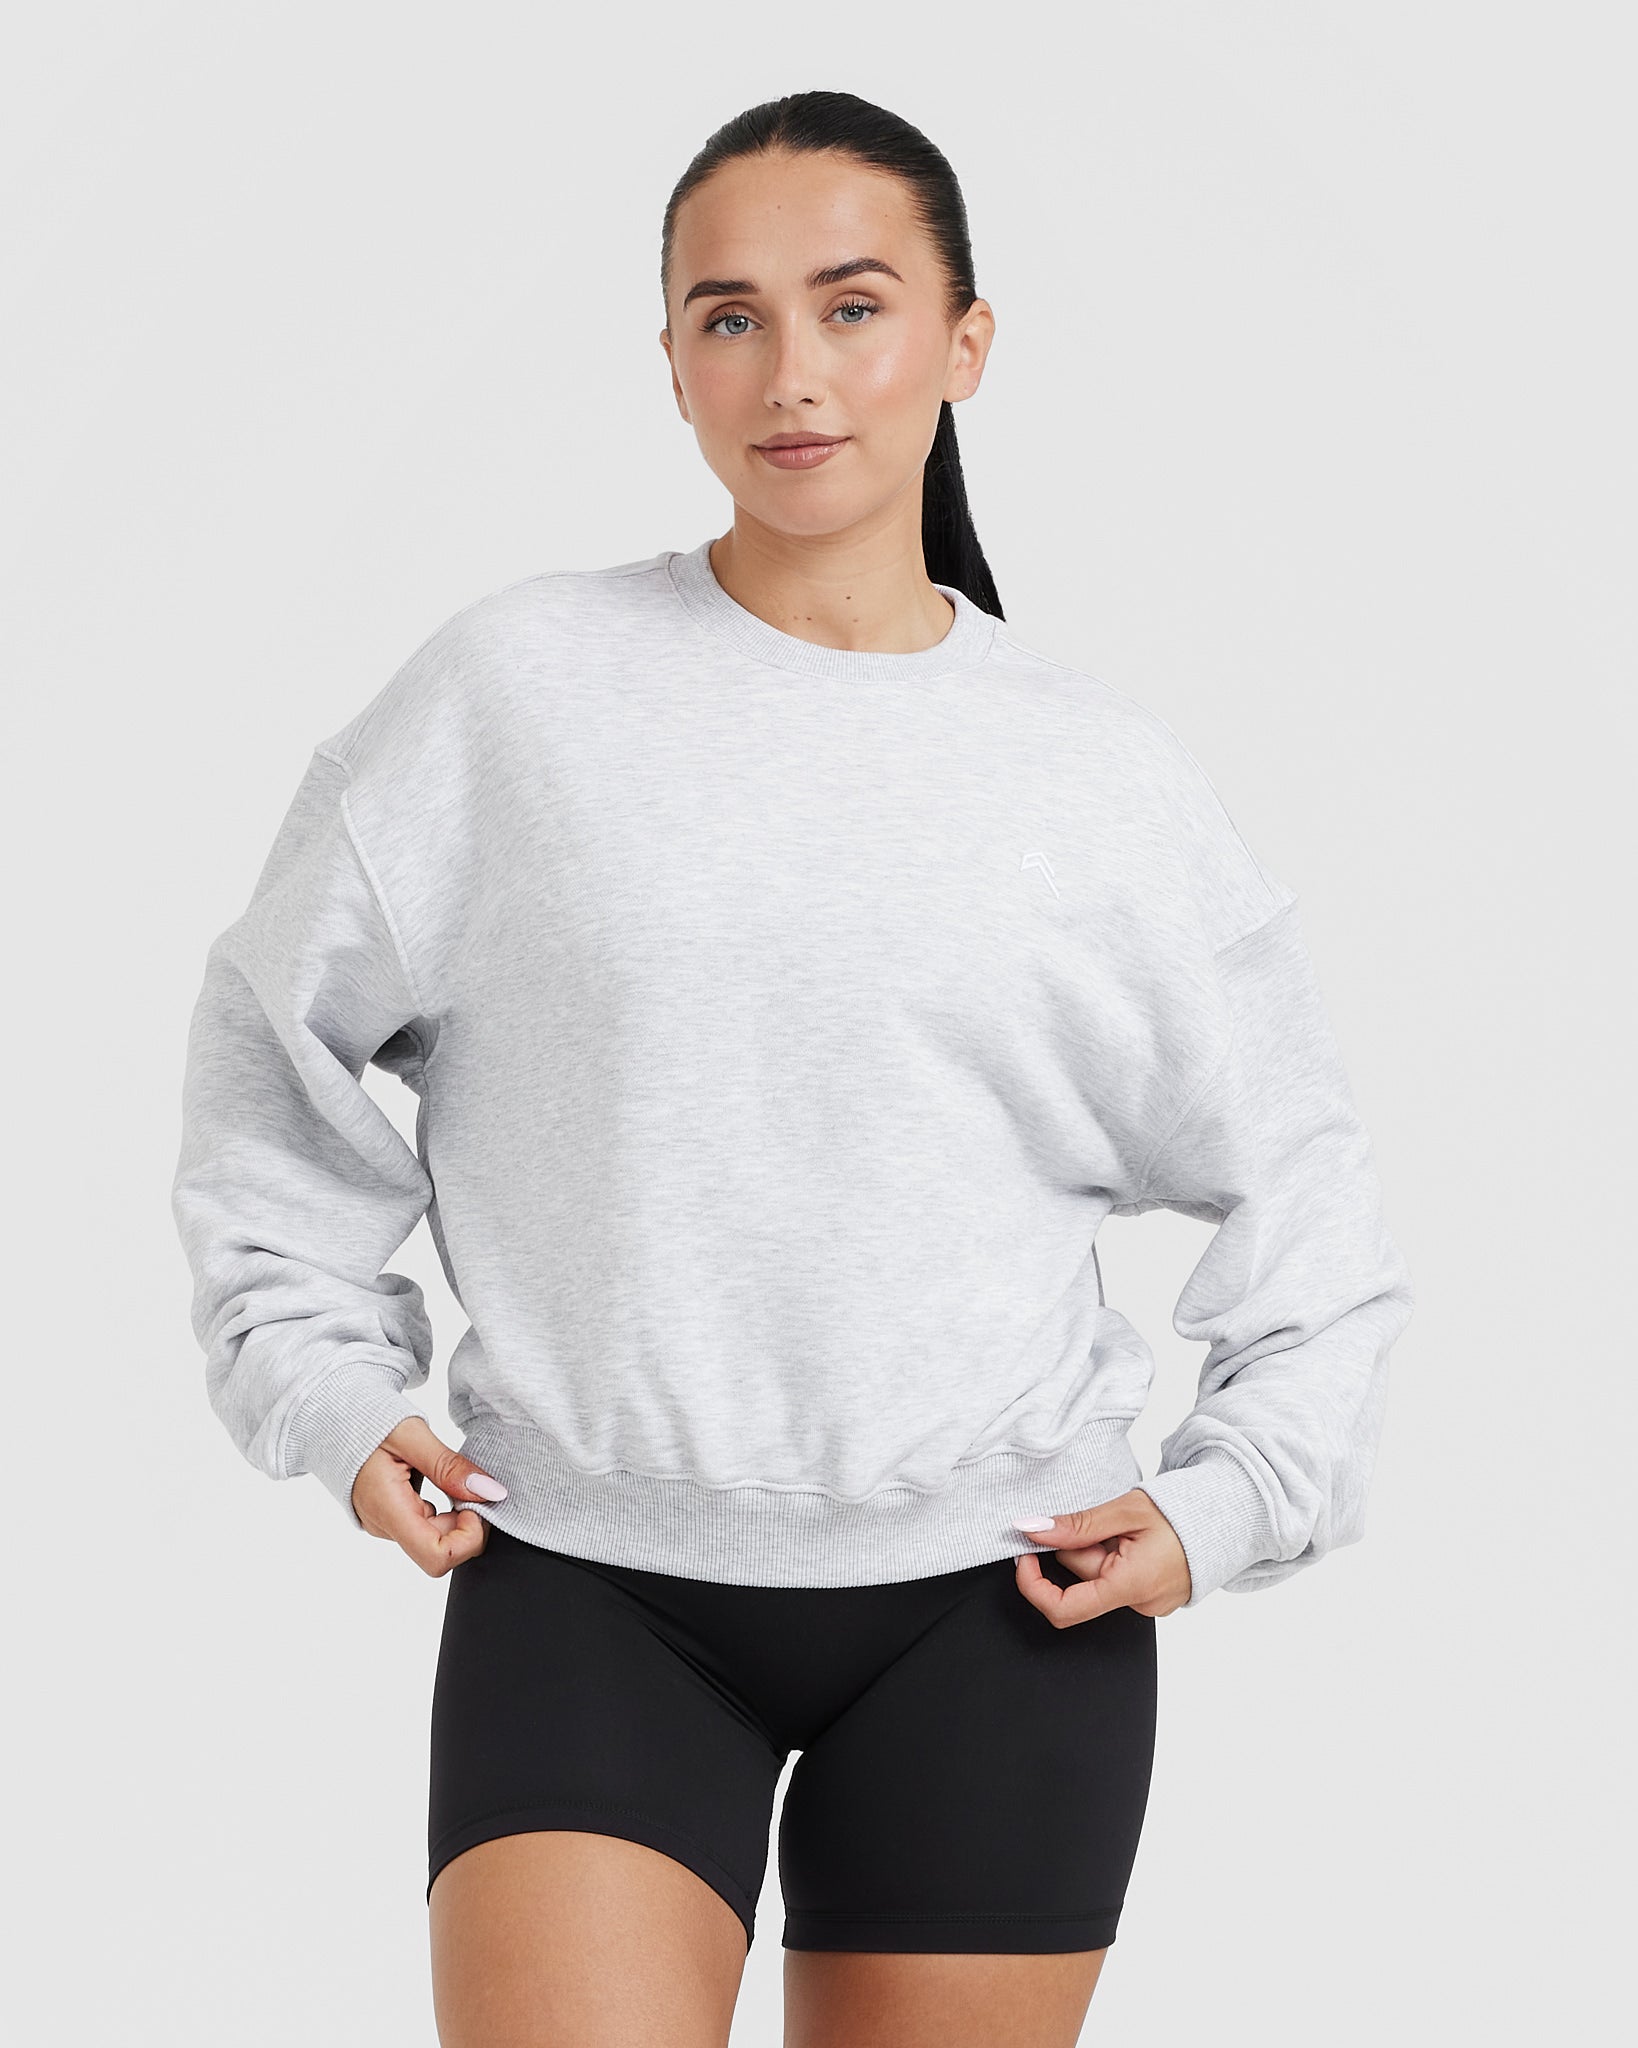 Grey Oversized Sweatshirt Women's in Light Grey Marl